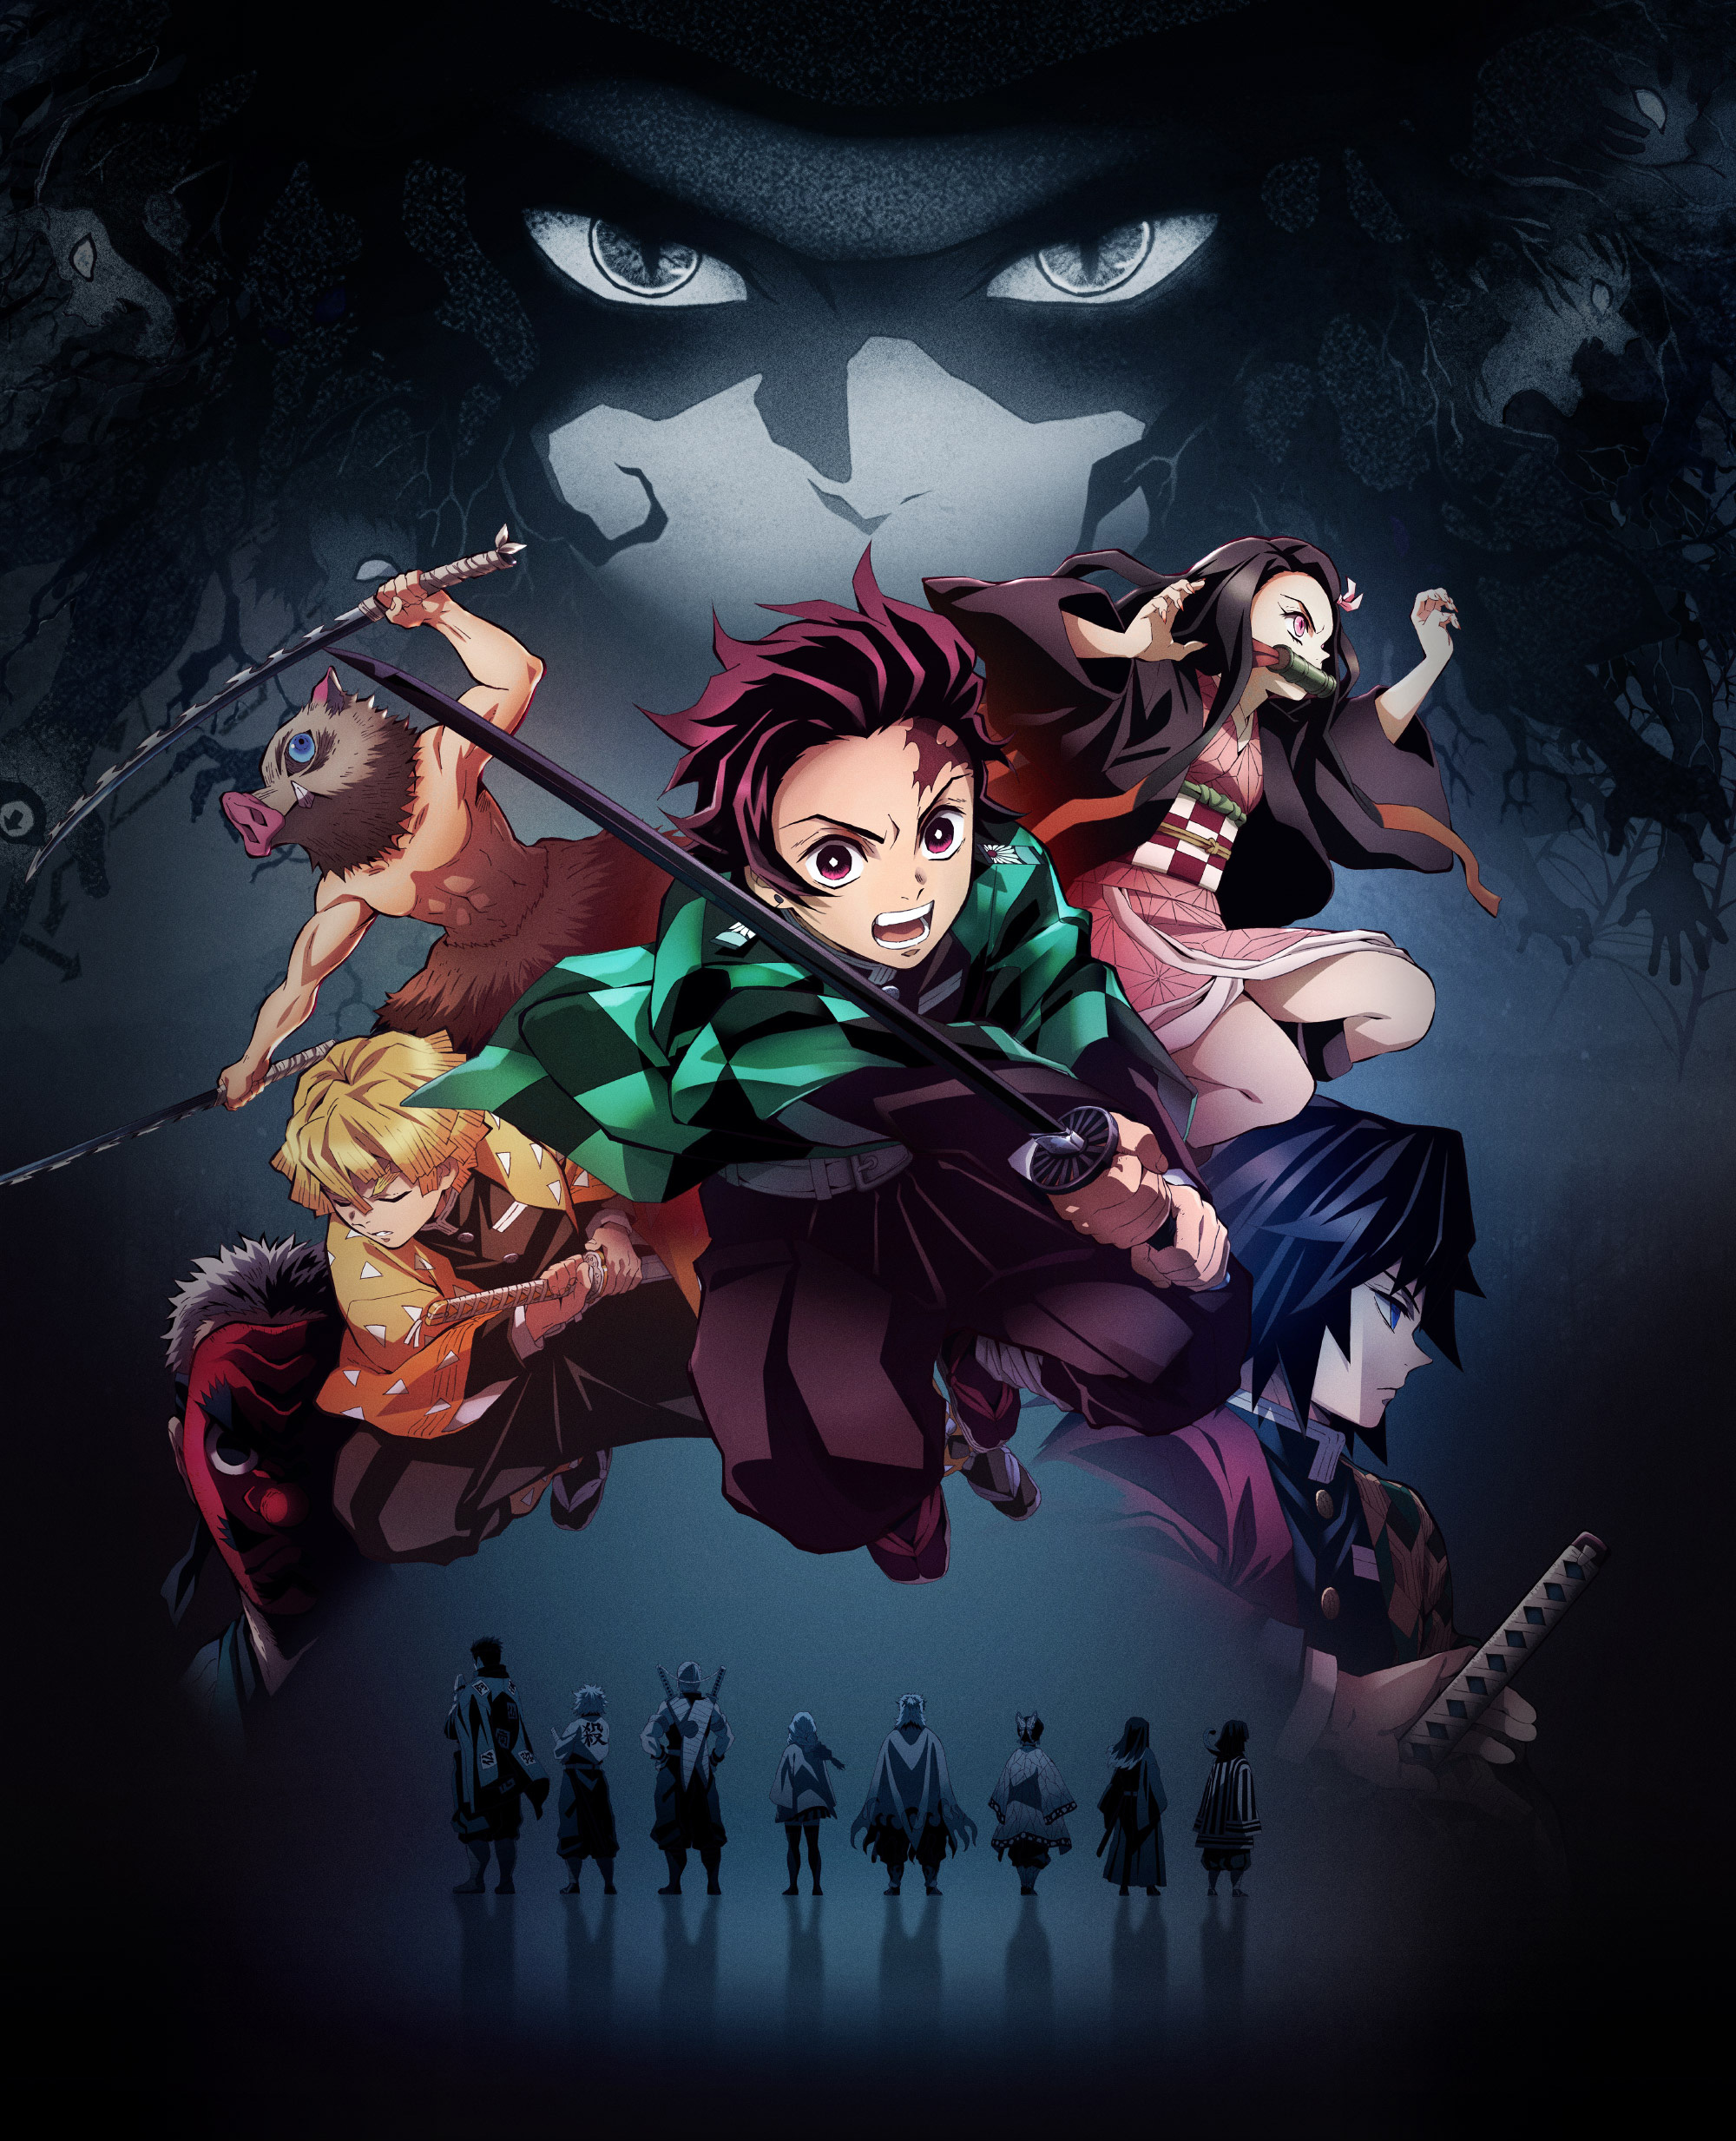 First 'Asterisk War' Second Season Japanese Anime DVD/BD Cover Artwork  Revealed